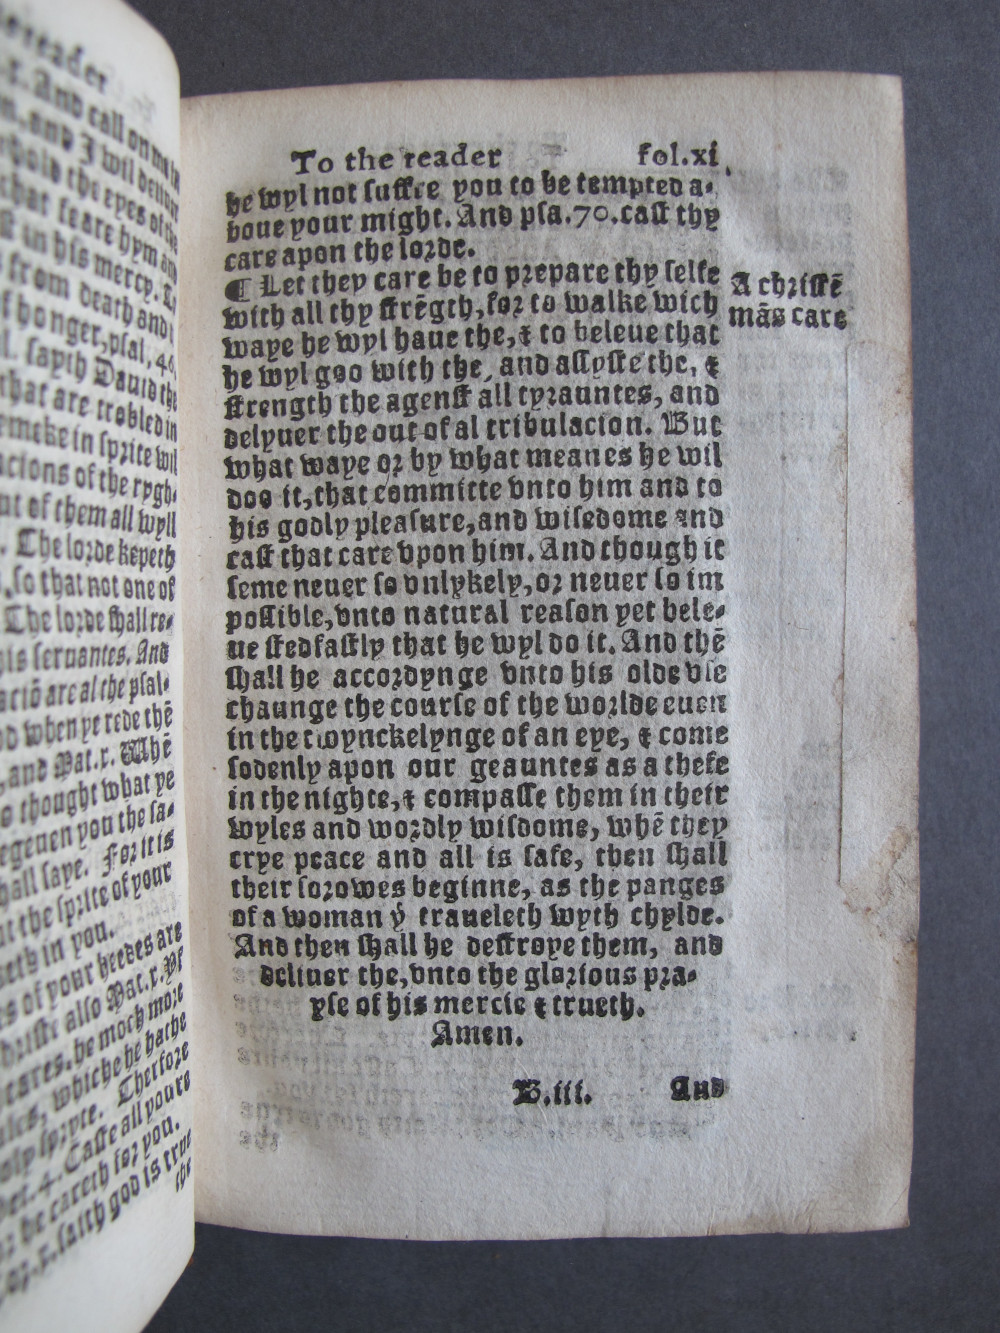 1 Folio B3 recto